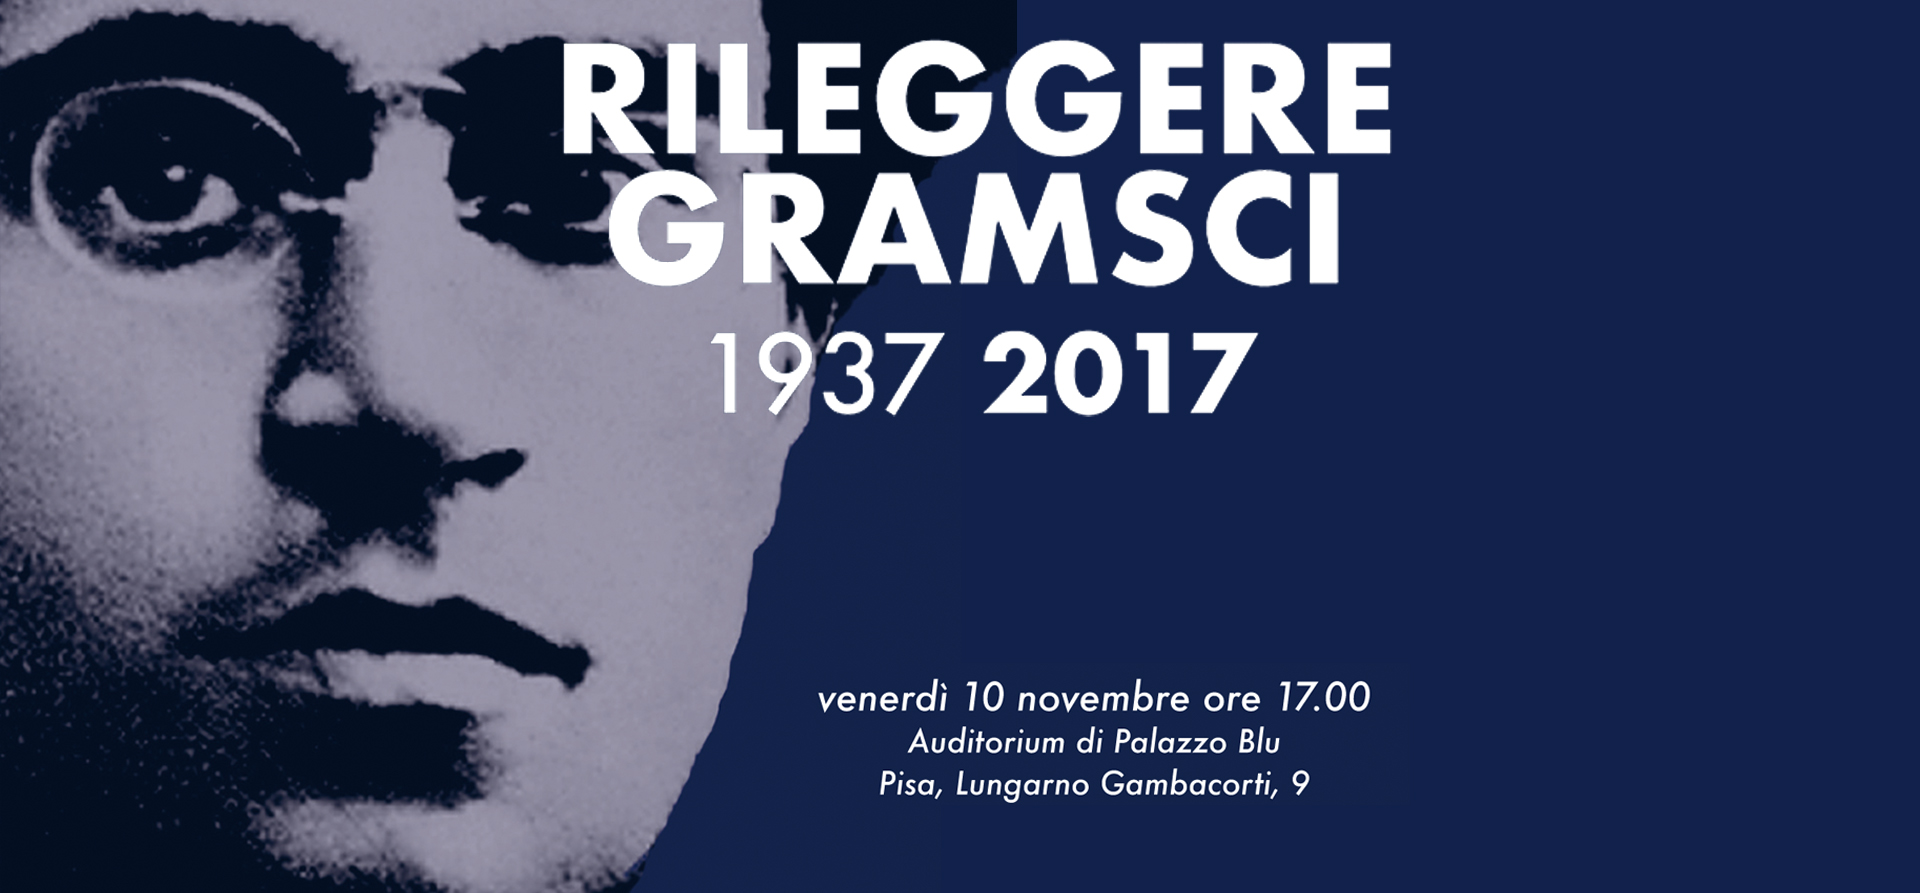 RILEGGERE GRAMSCI